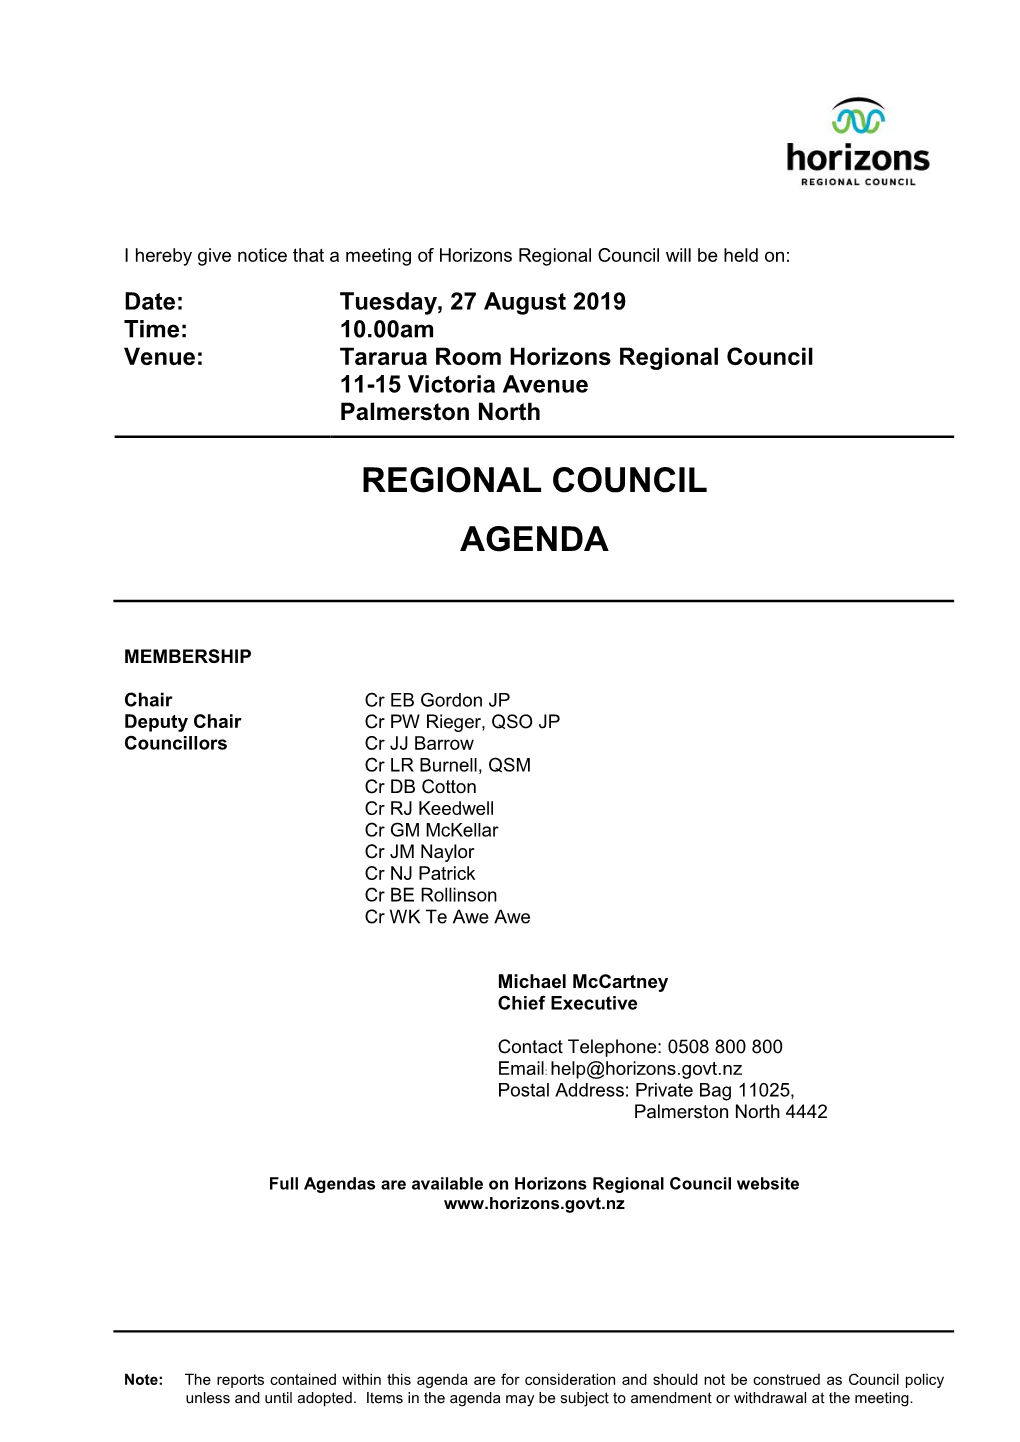 Agenda of Regional Council